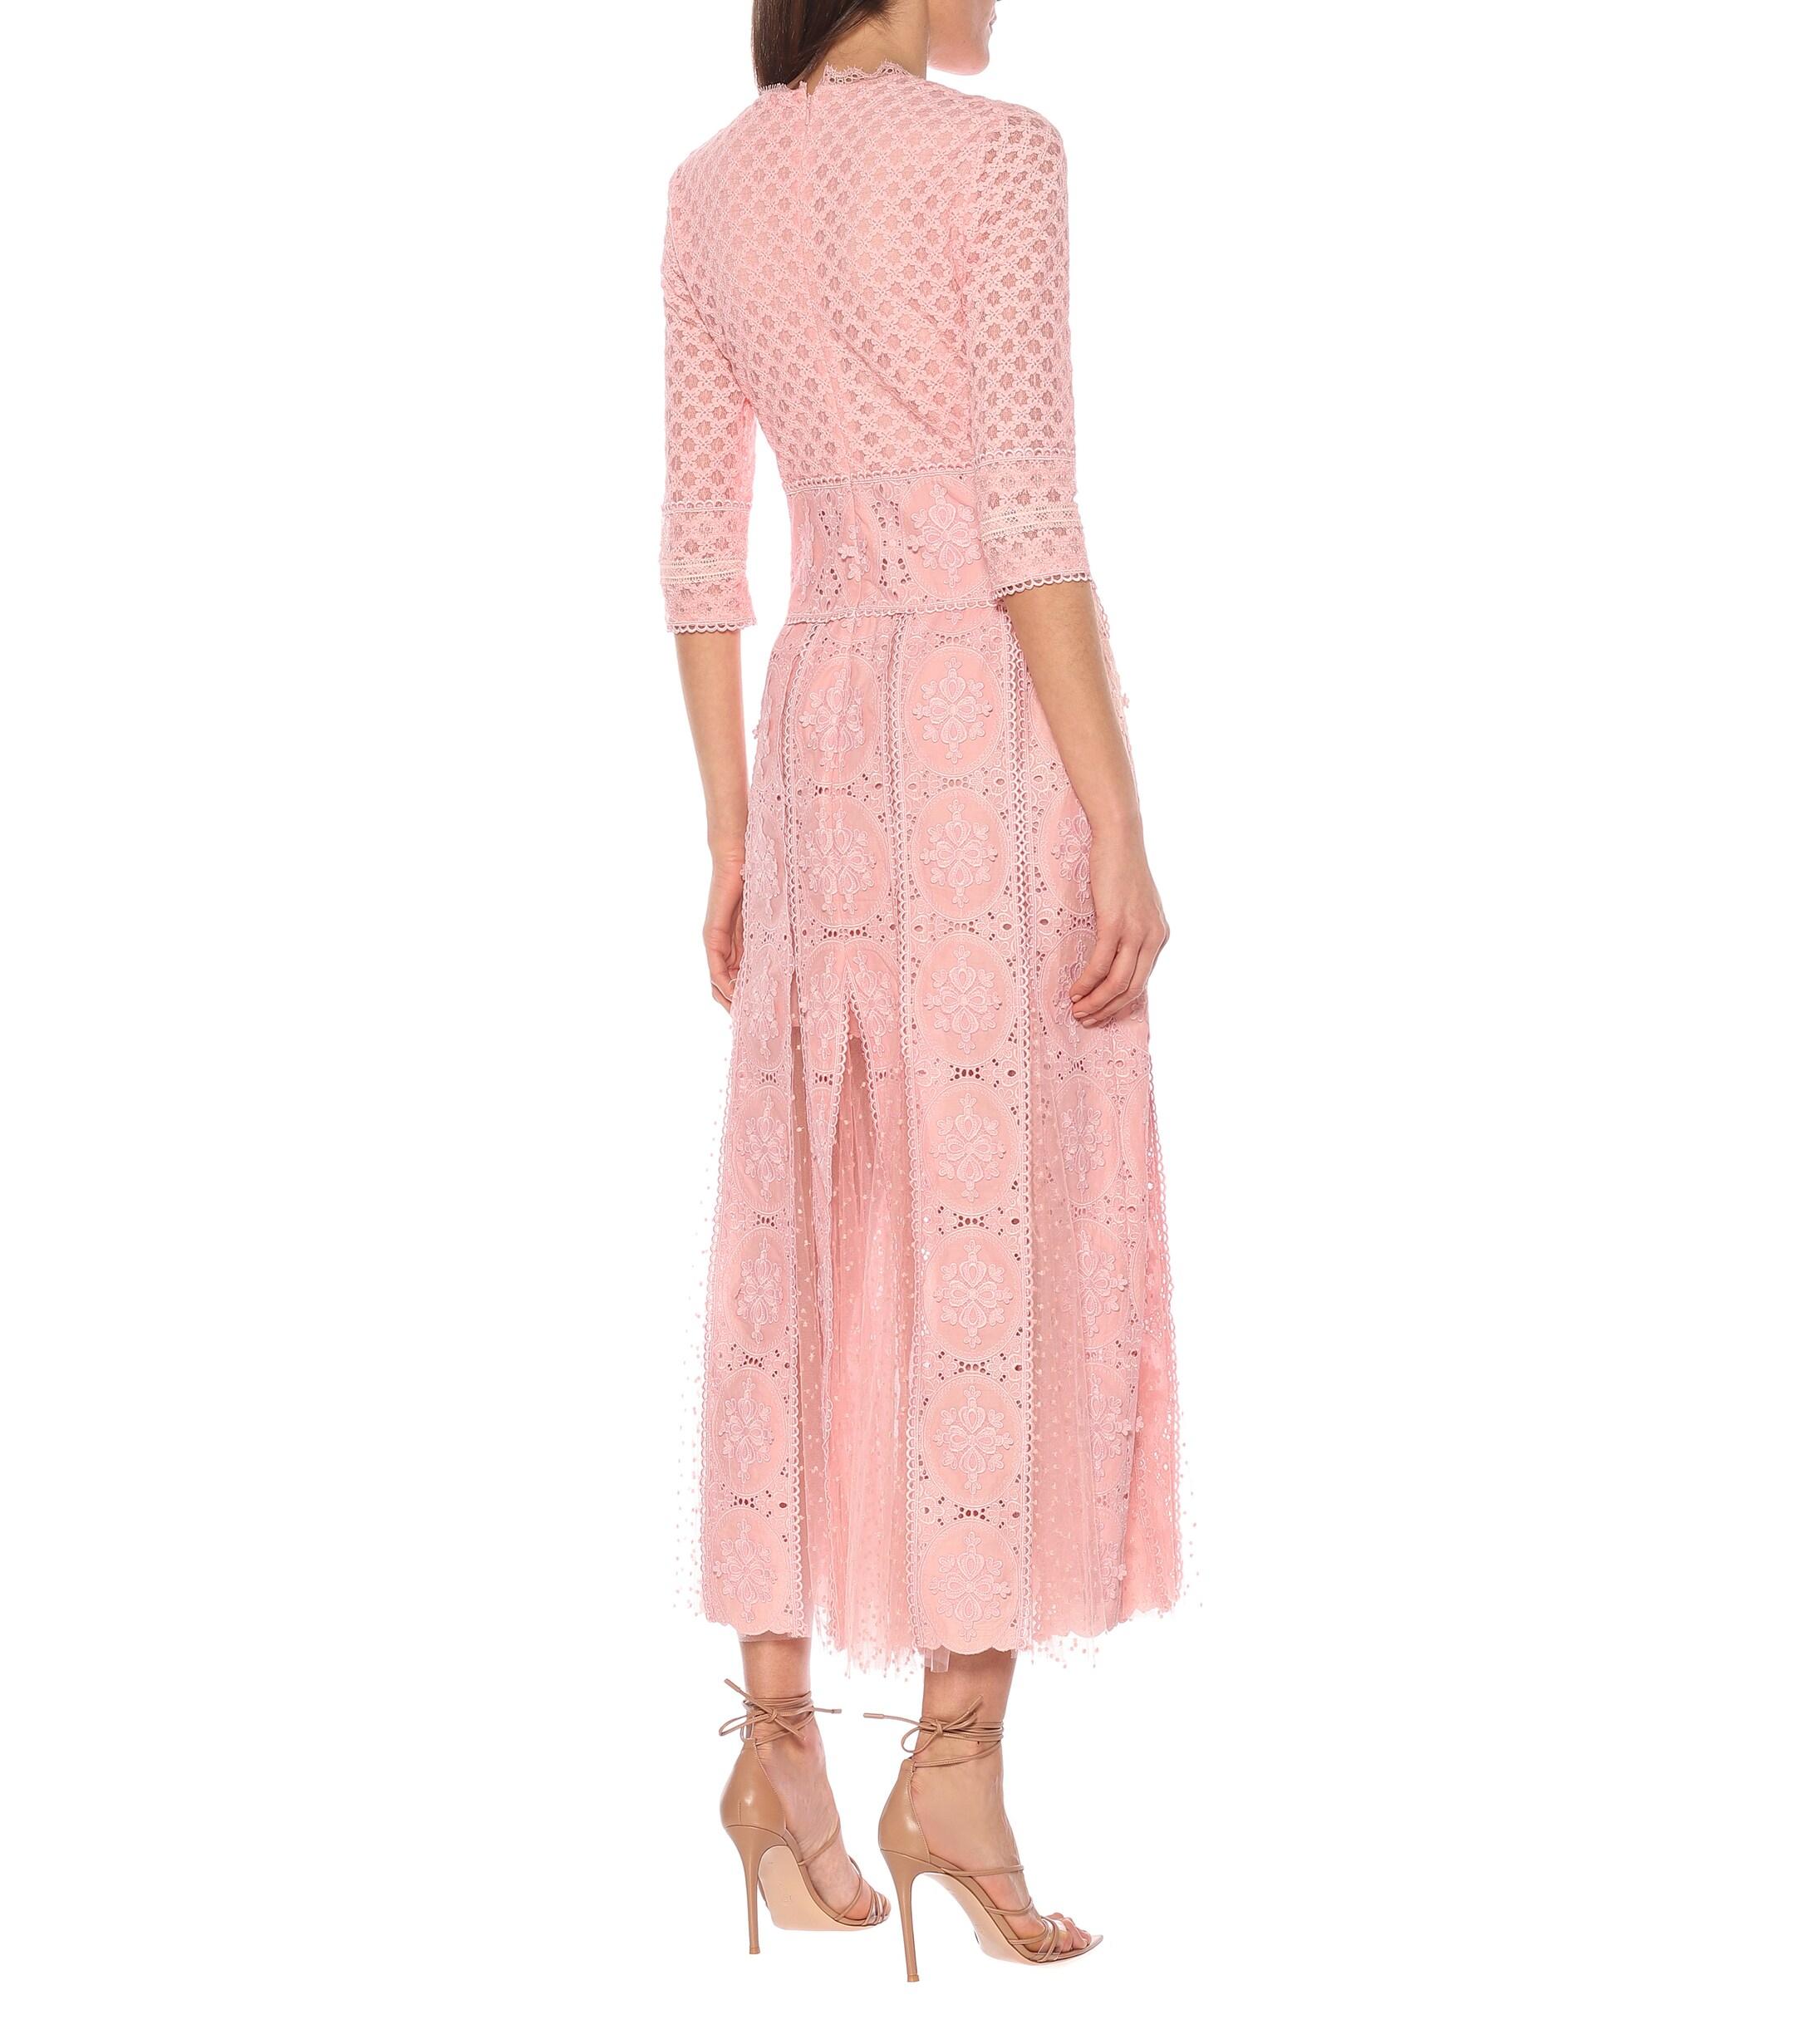 Costarellos Lace Midi Dress in Pink - Lyst